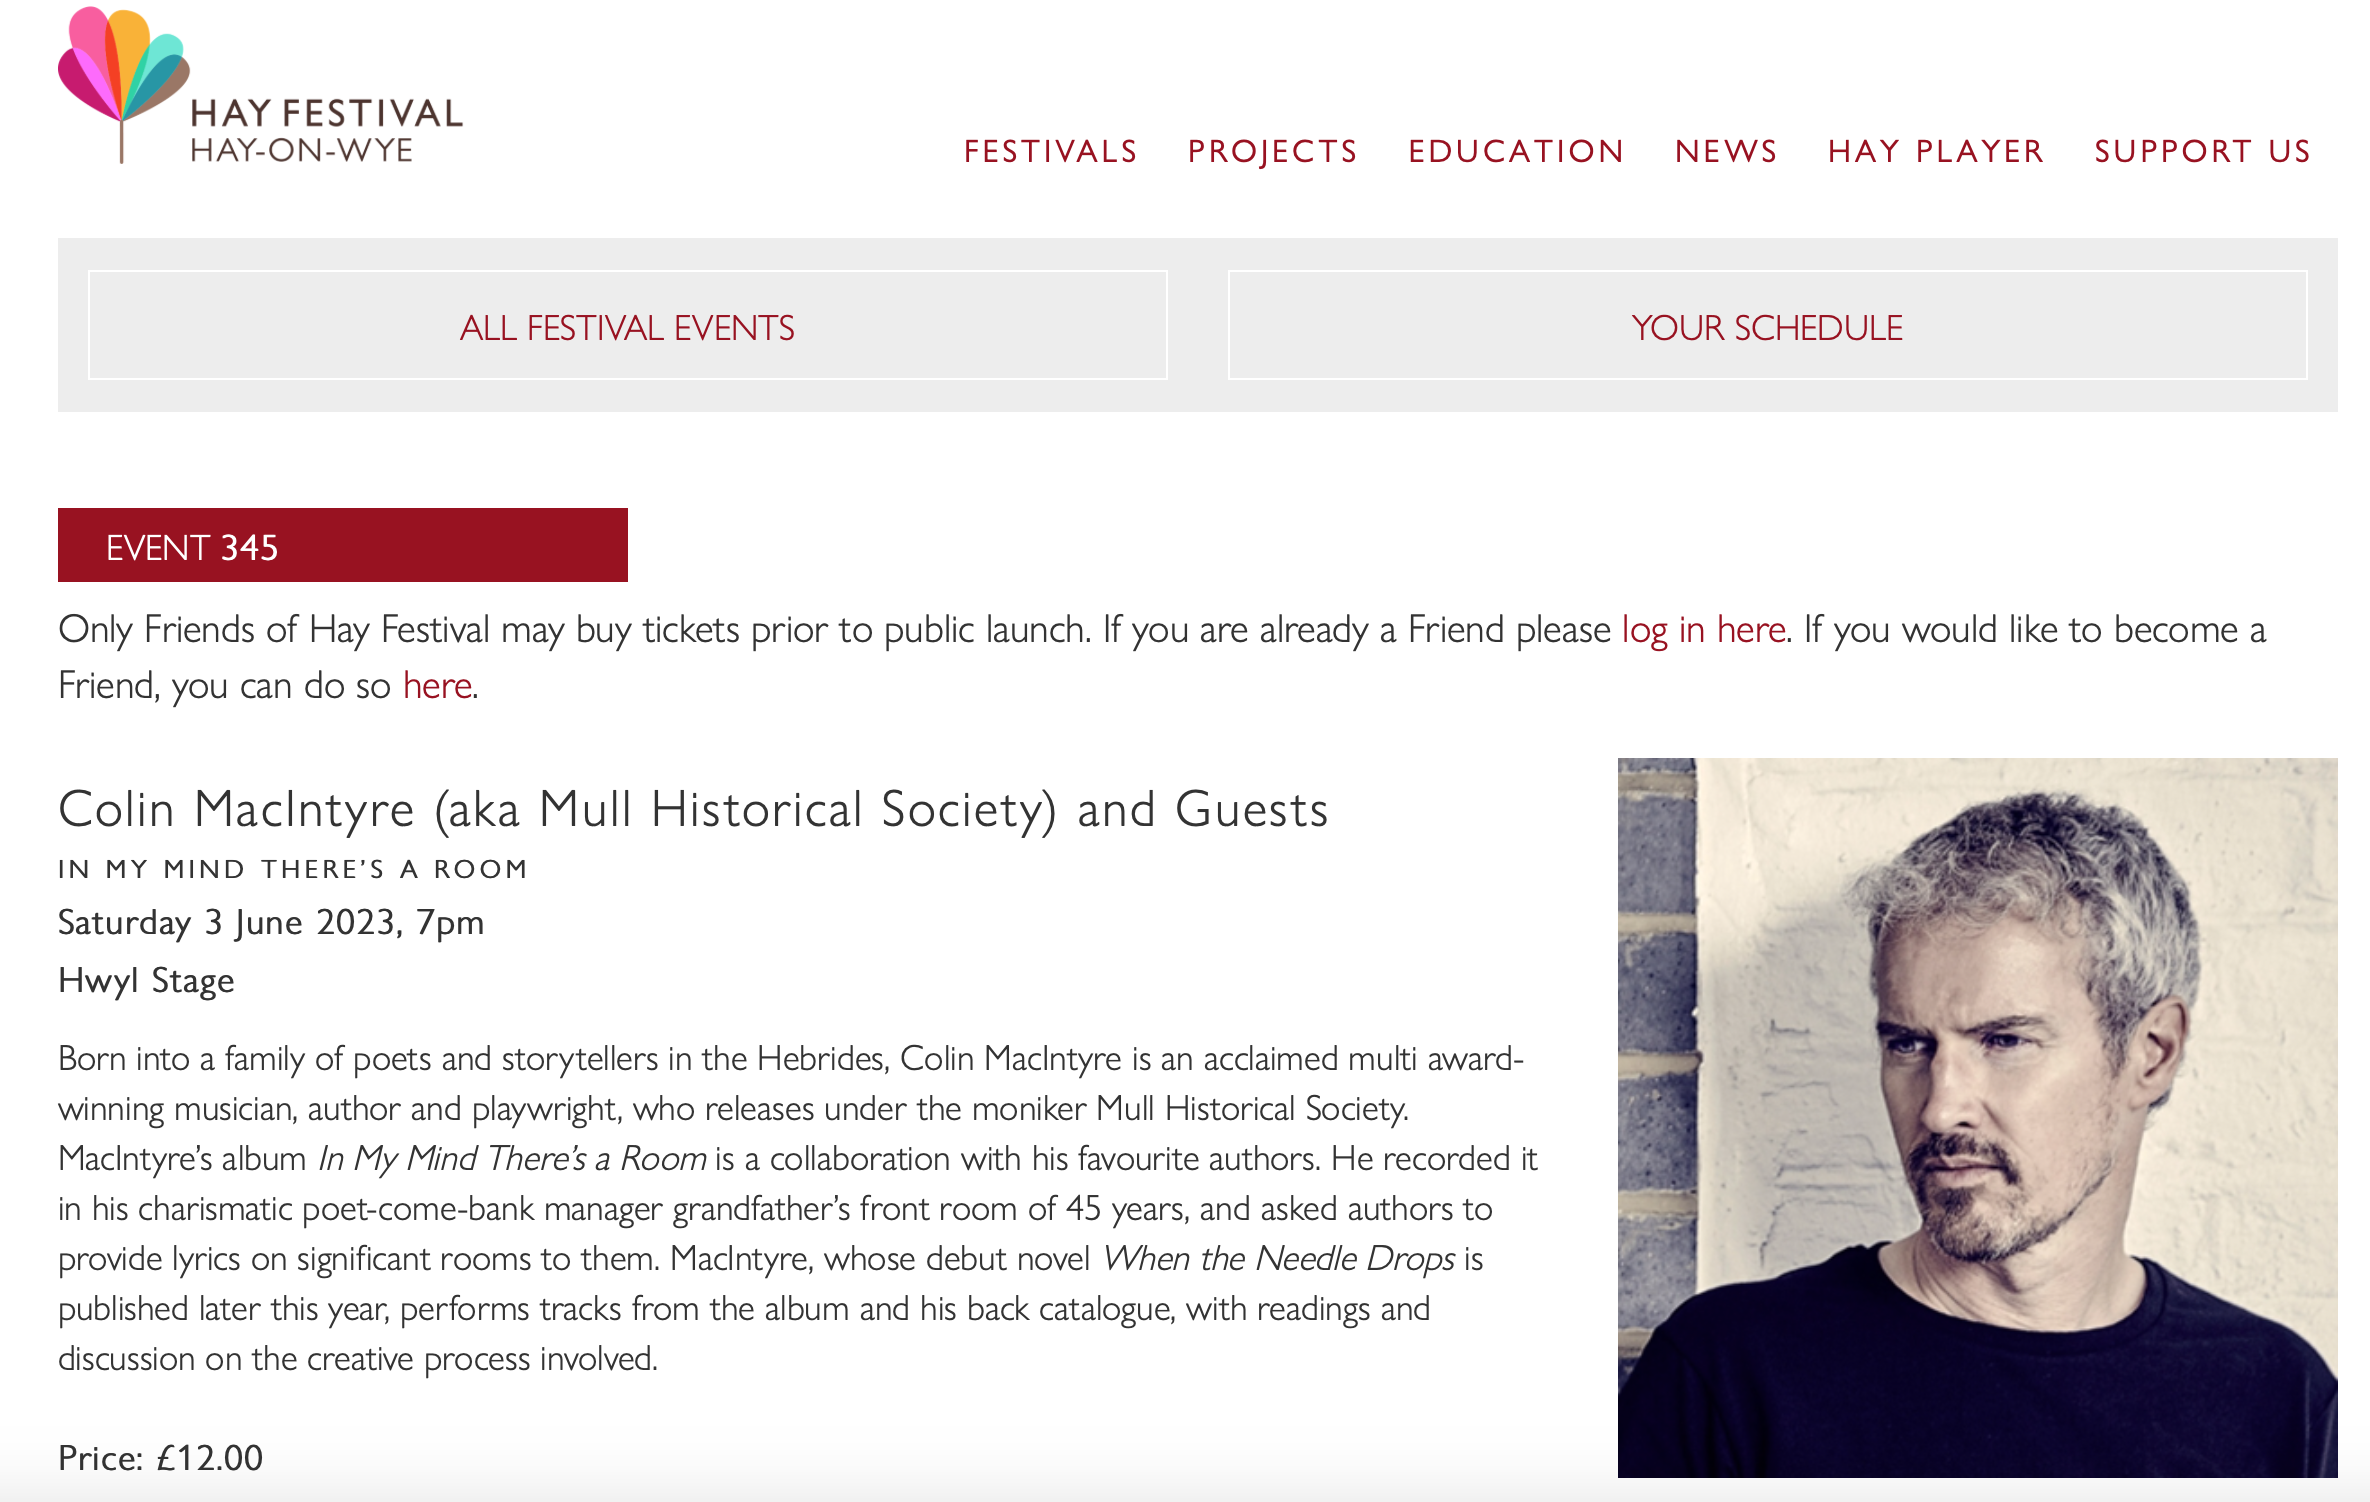 Colin MacIntyre/Mull Historical Society At Hay Festival – Saturday June 3rd